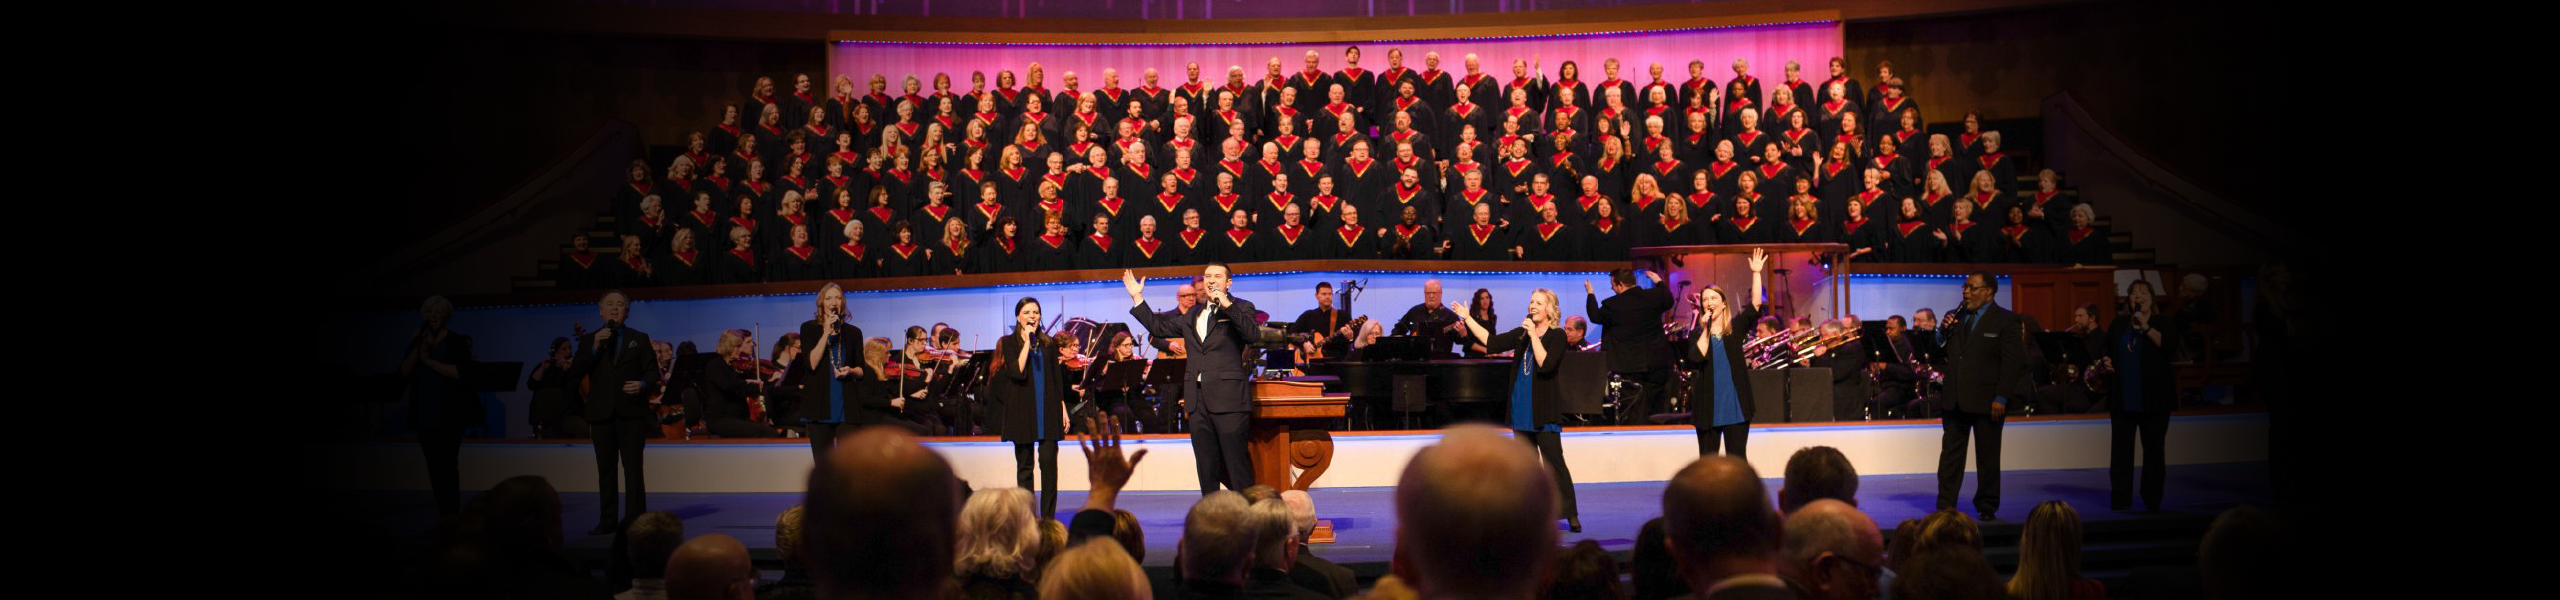 Choir & Orchestra Worship | First Baptist Dallas